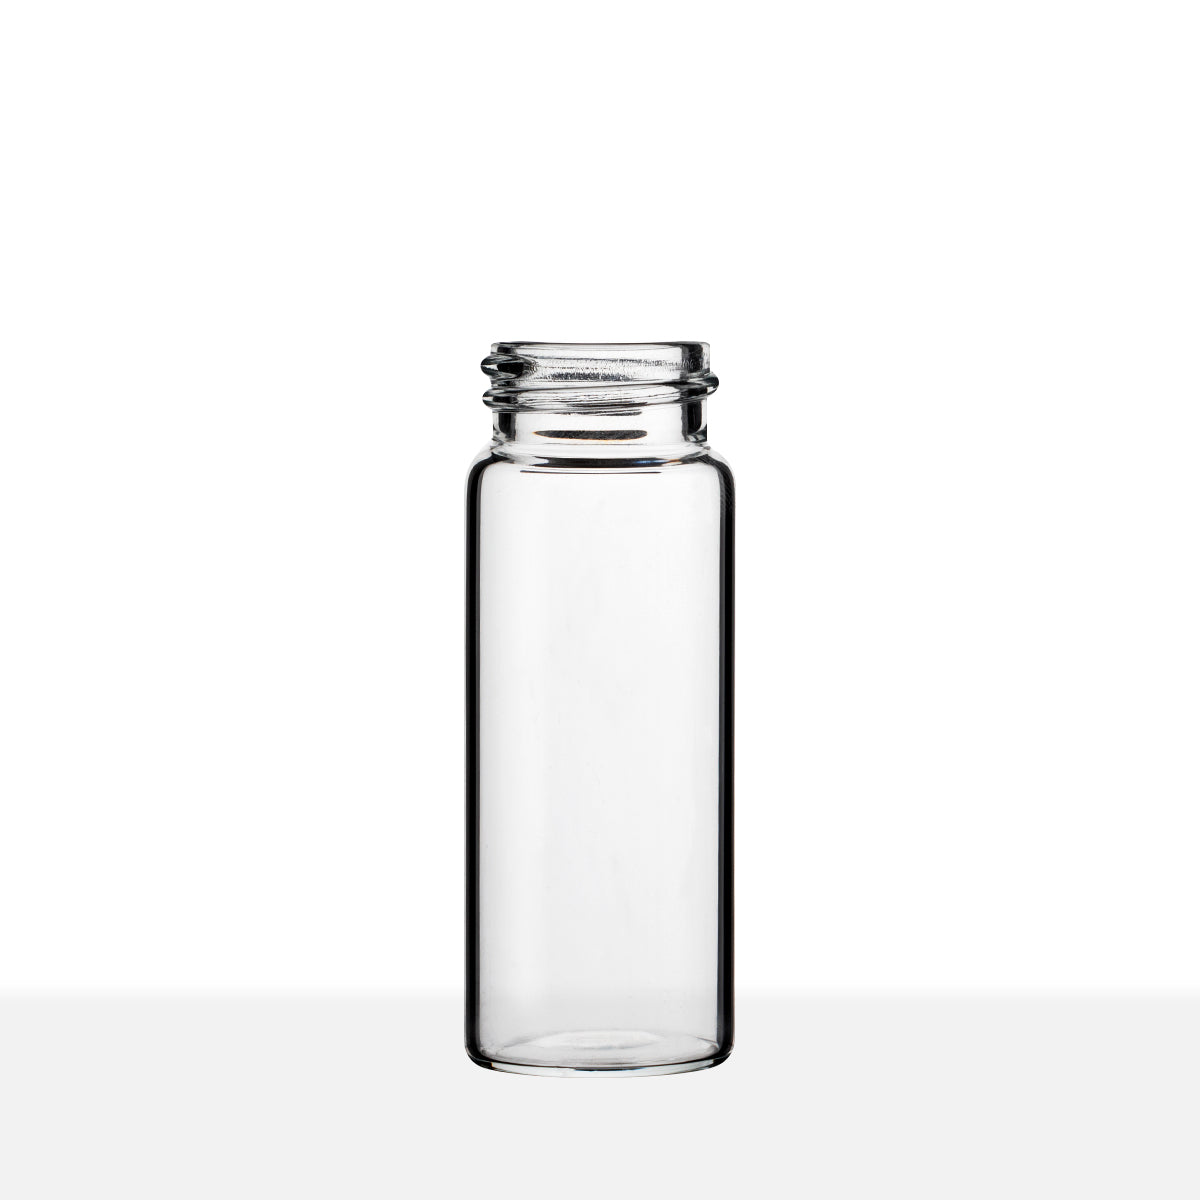 CAPSULE GLASS VIALS - CLEAR Item #:VC242770